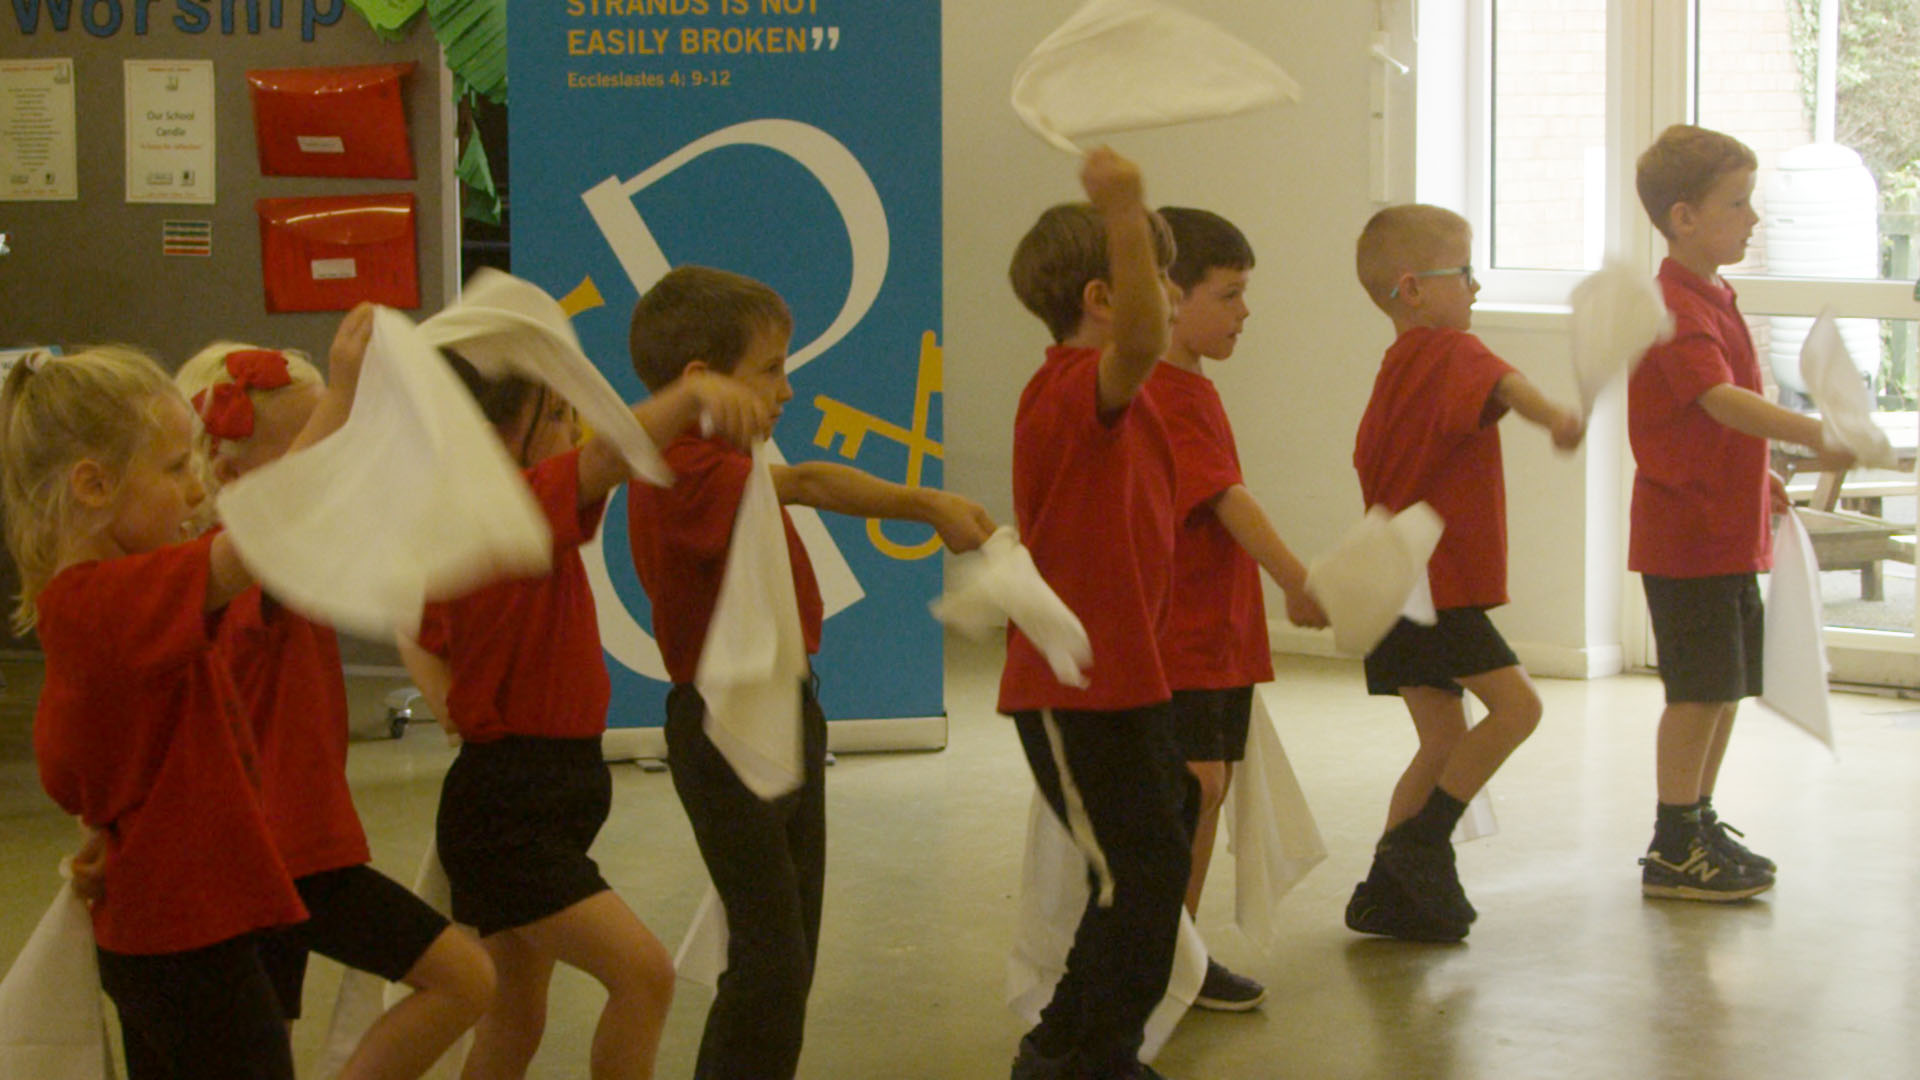 School children performing morris dancing